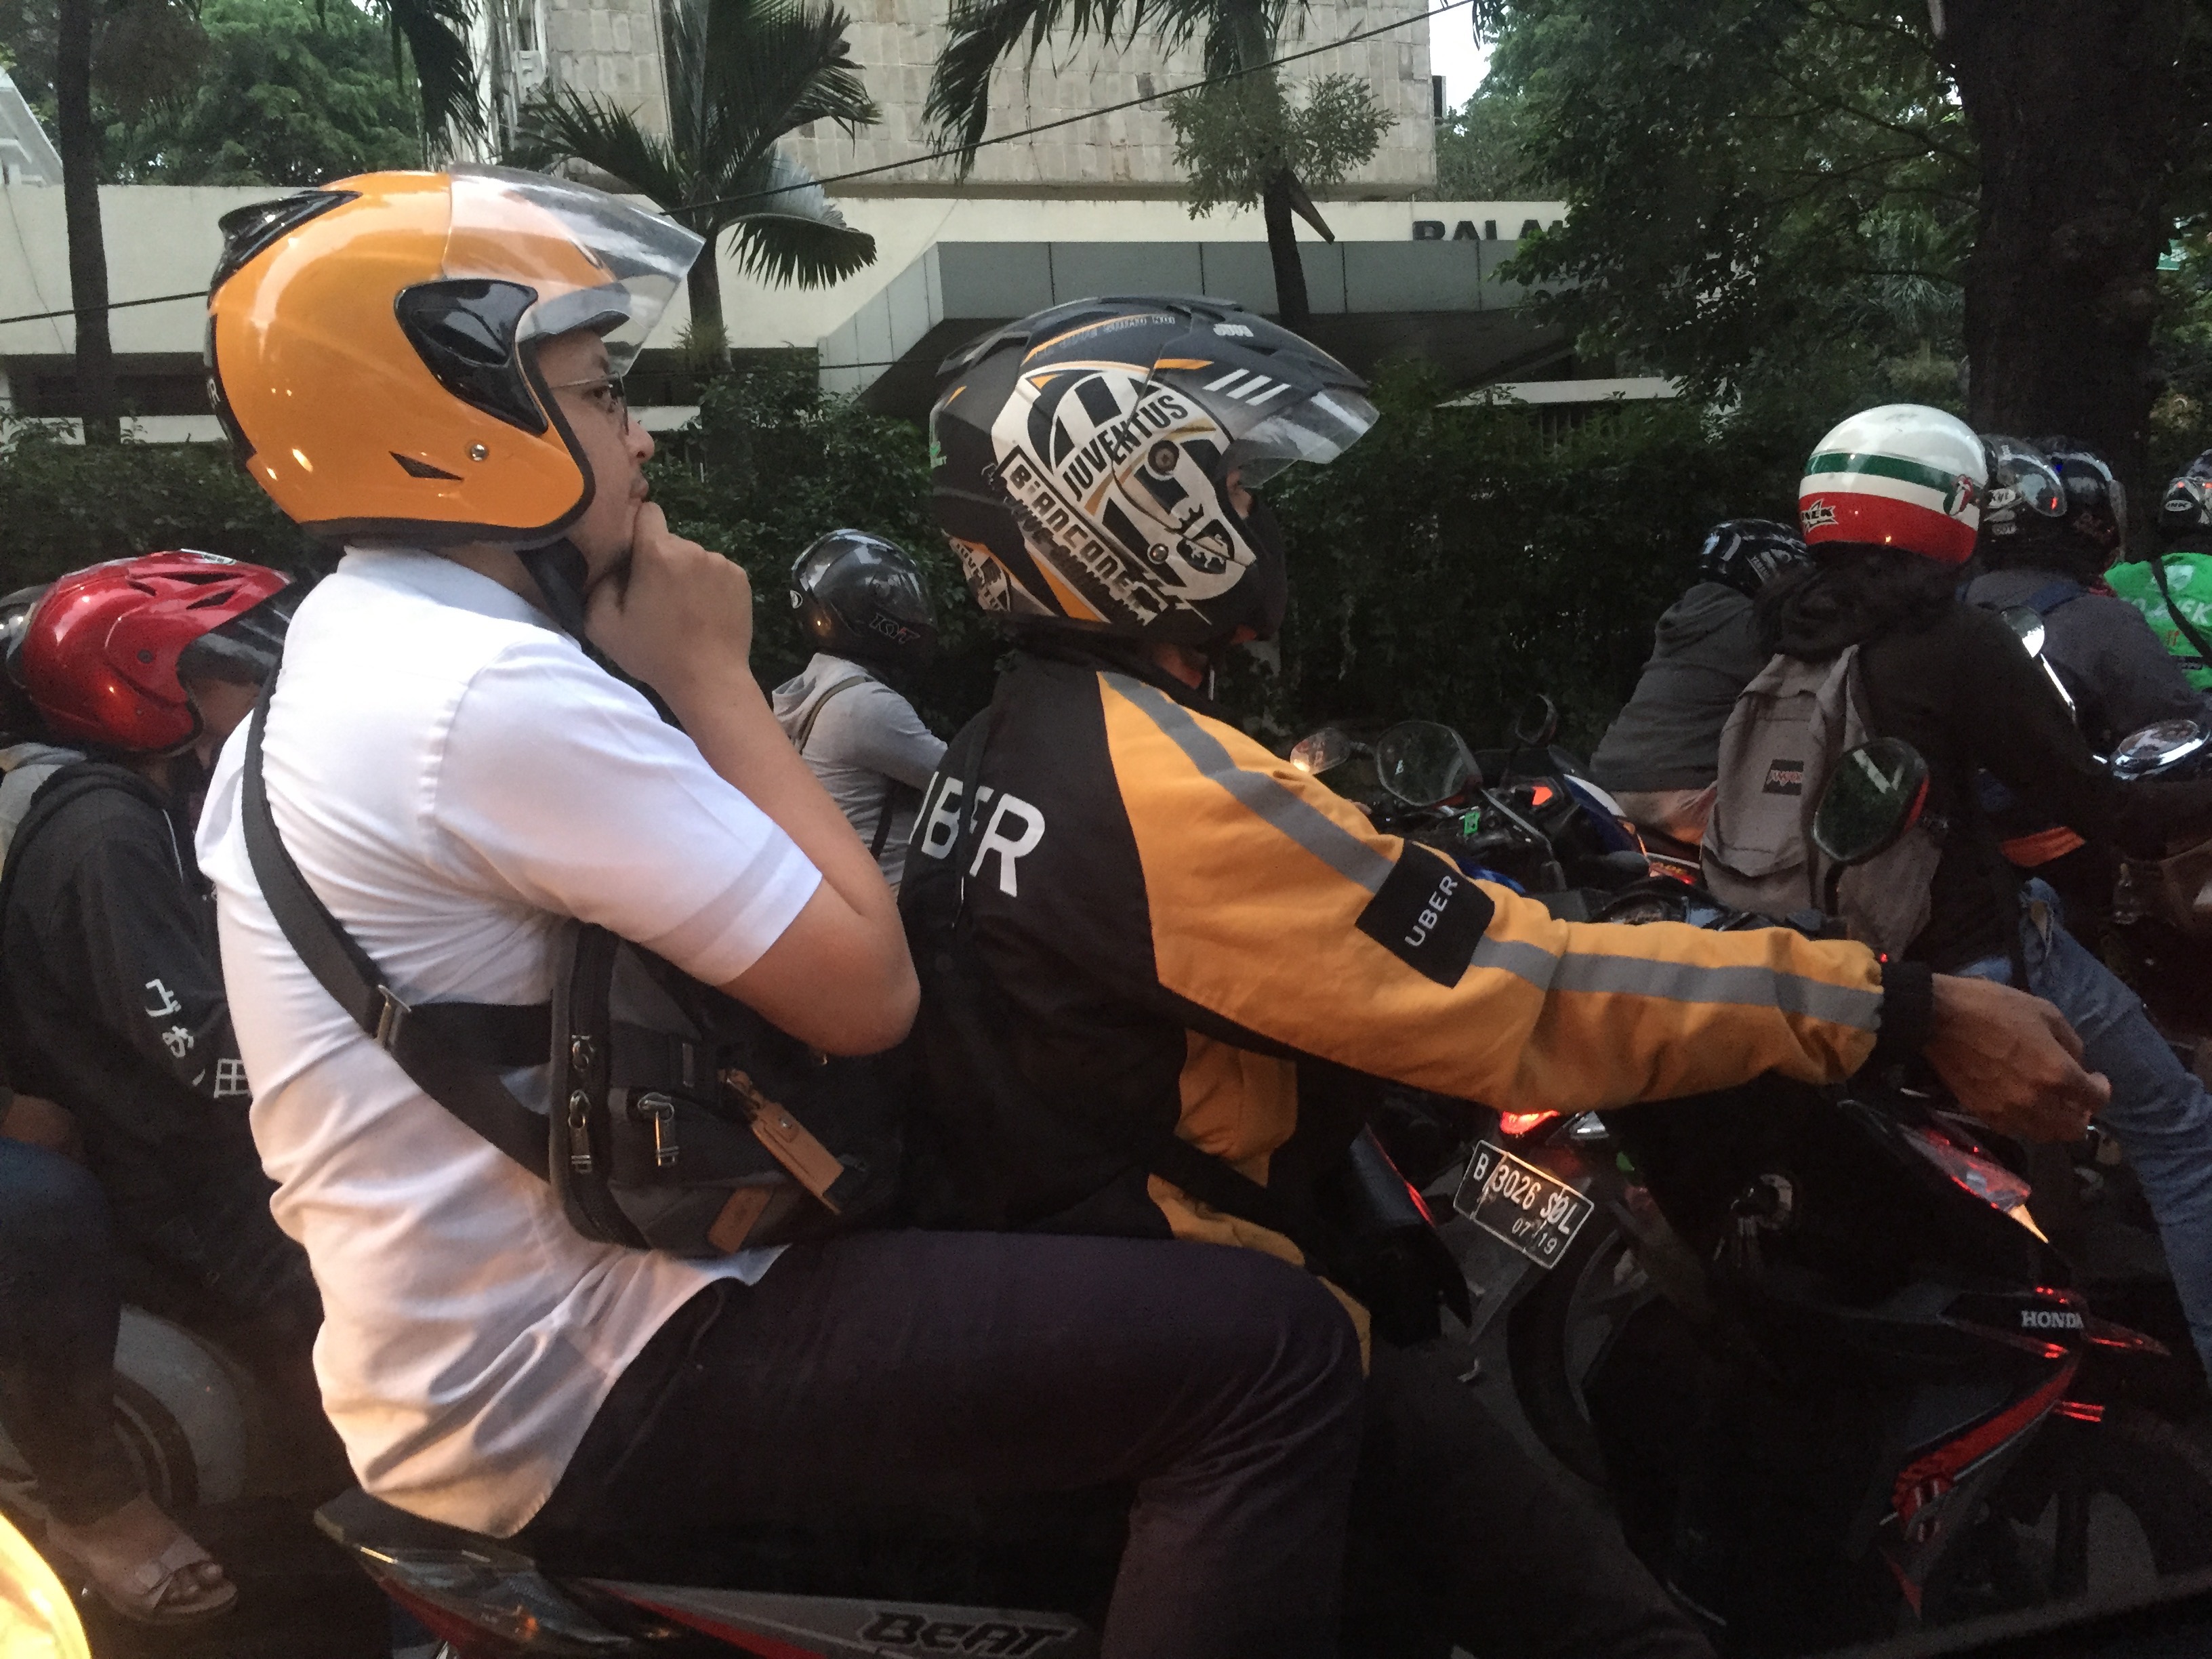 An Uber motorbike taxi